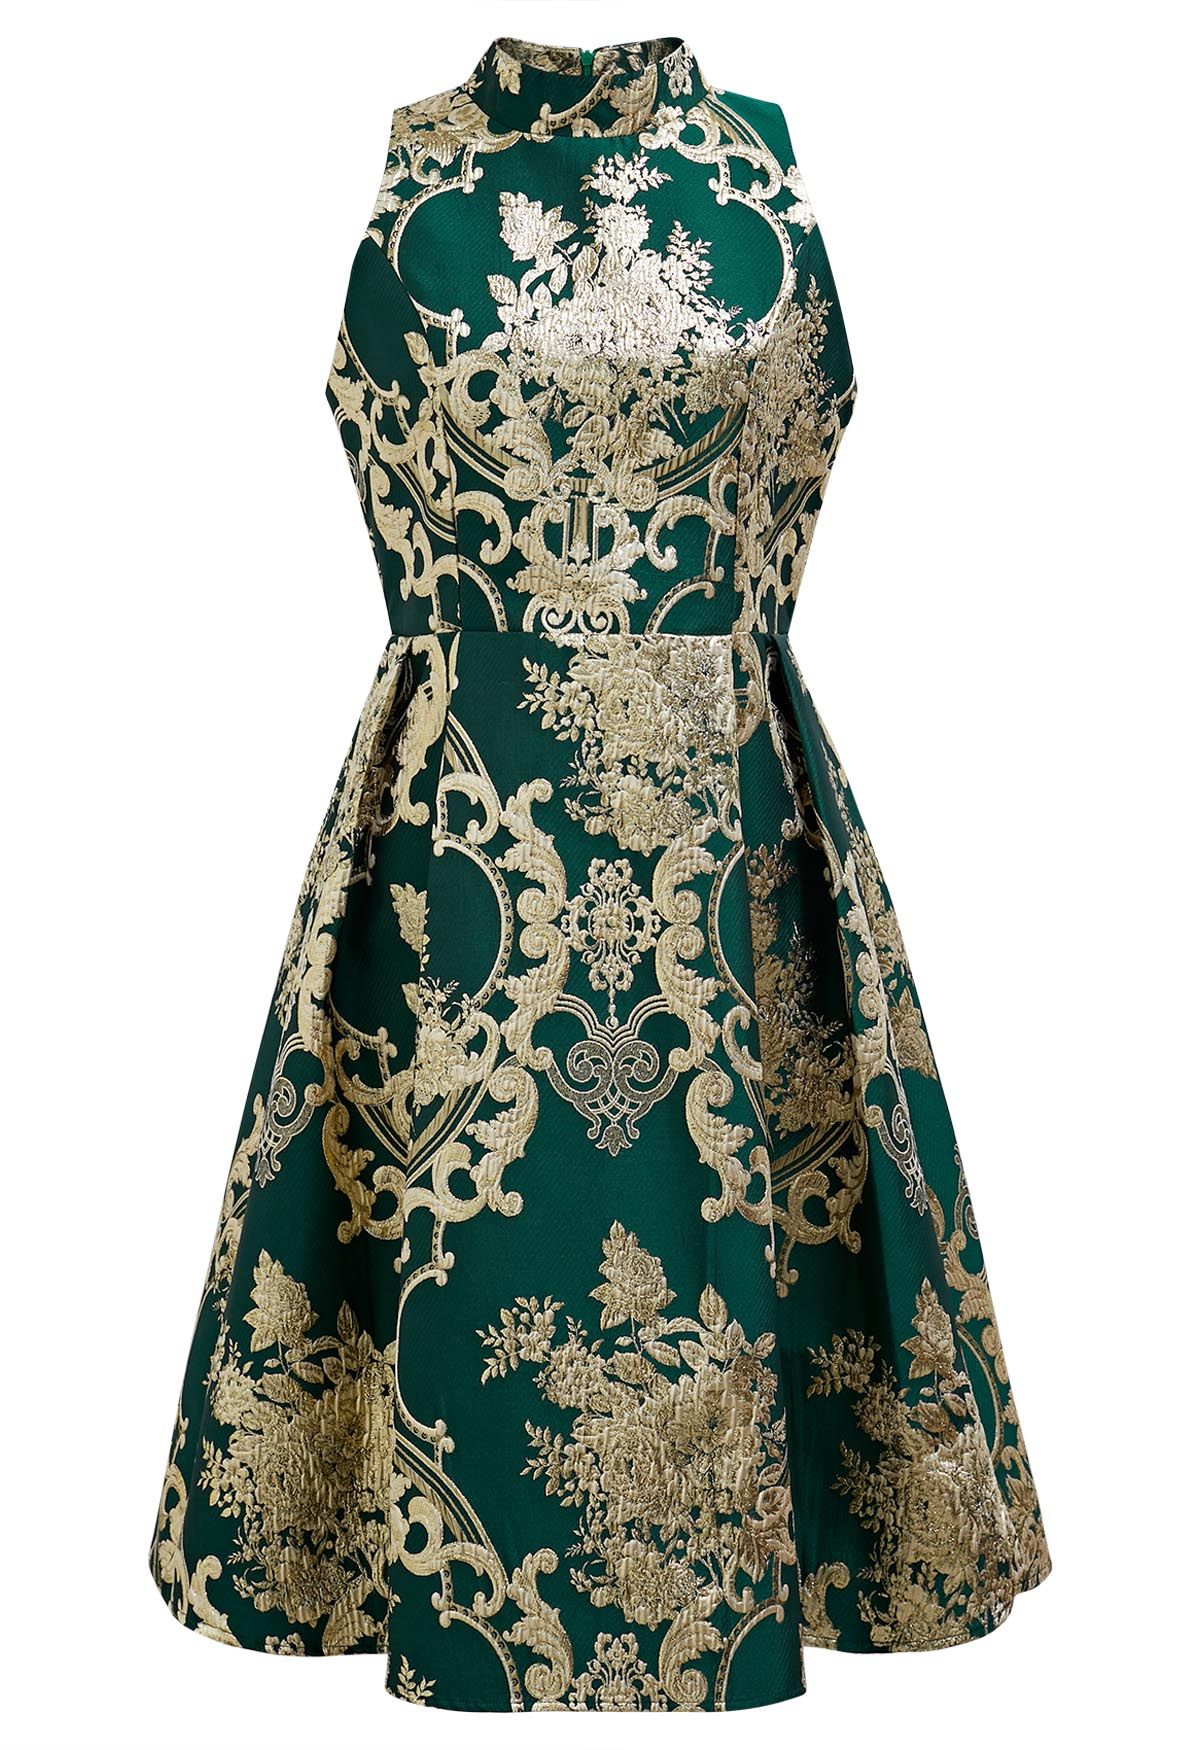 Wunderschönes ärmelloses Kleid aus Jacquard im Pfingstrosen-Barockstil in Dunkelgrün